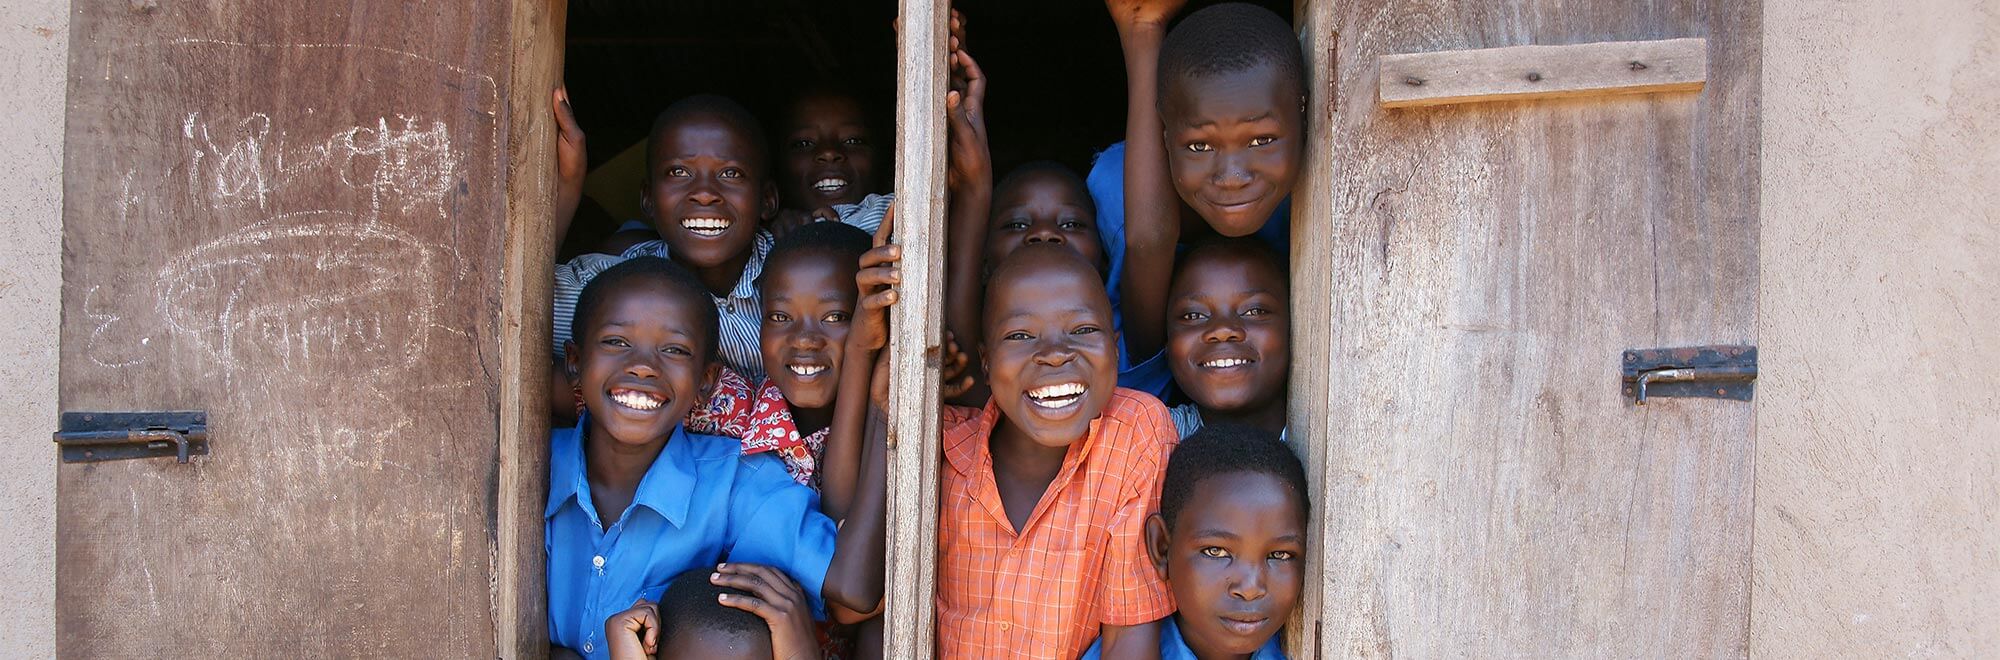 a group of children in an ugandan school